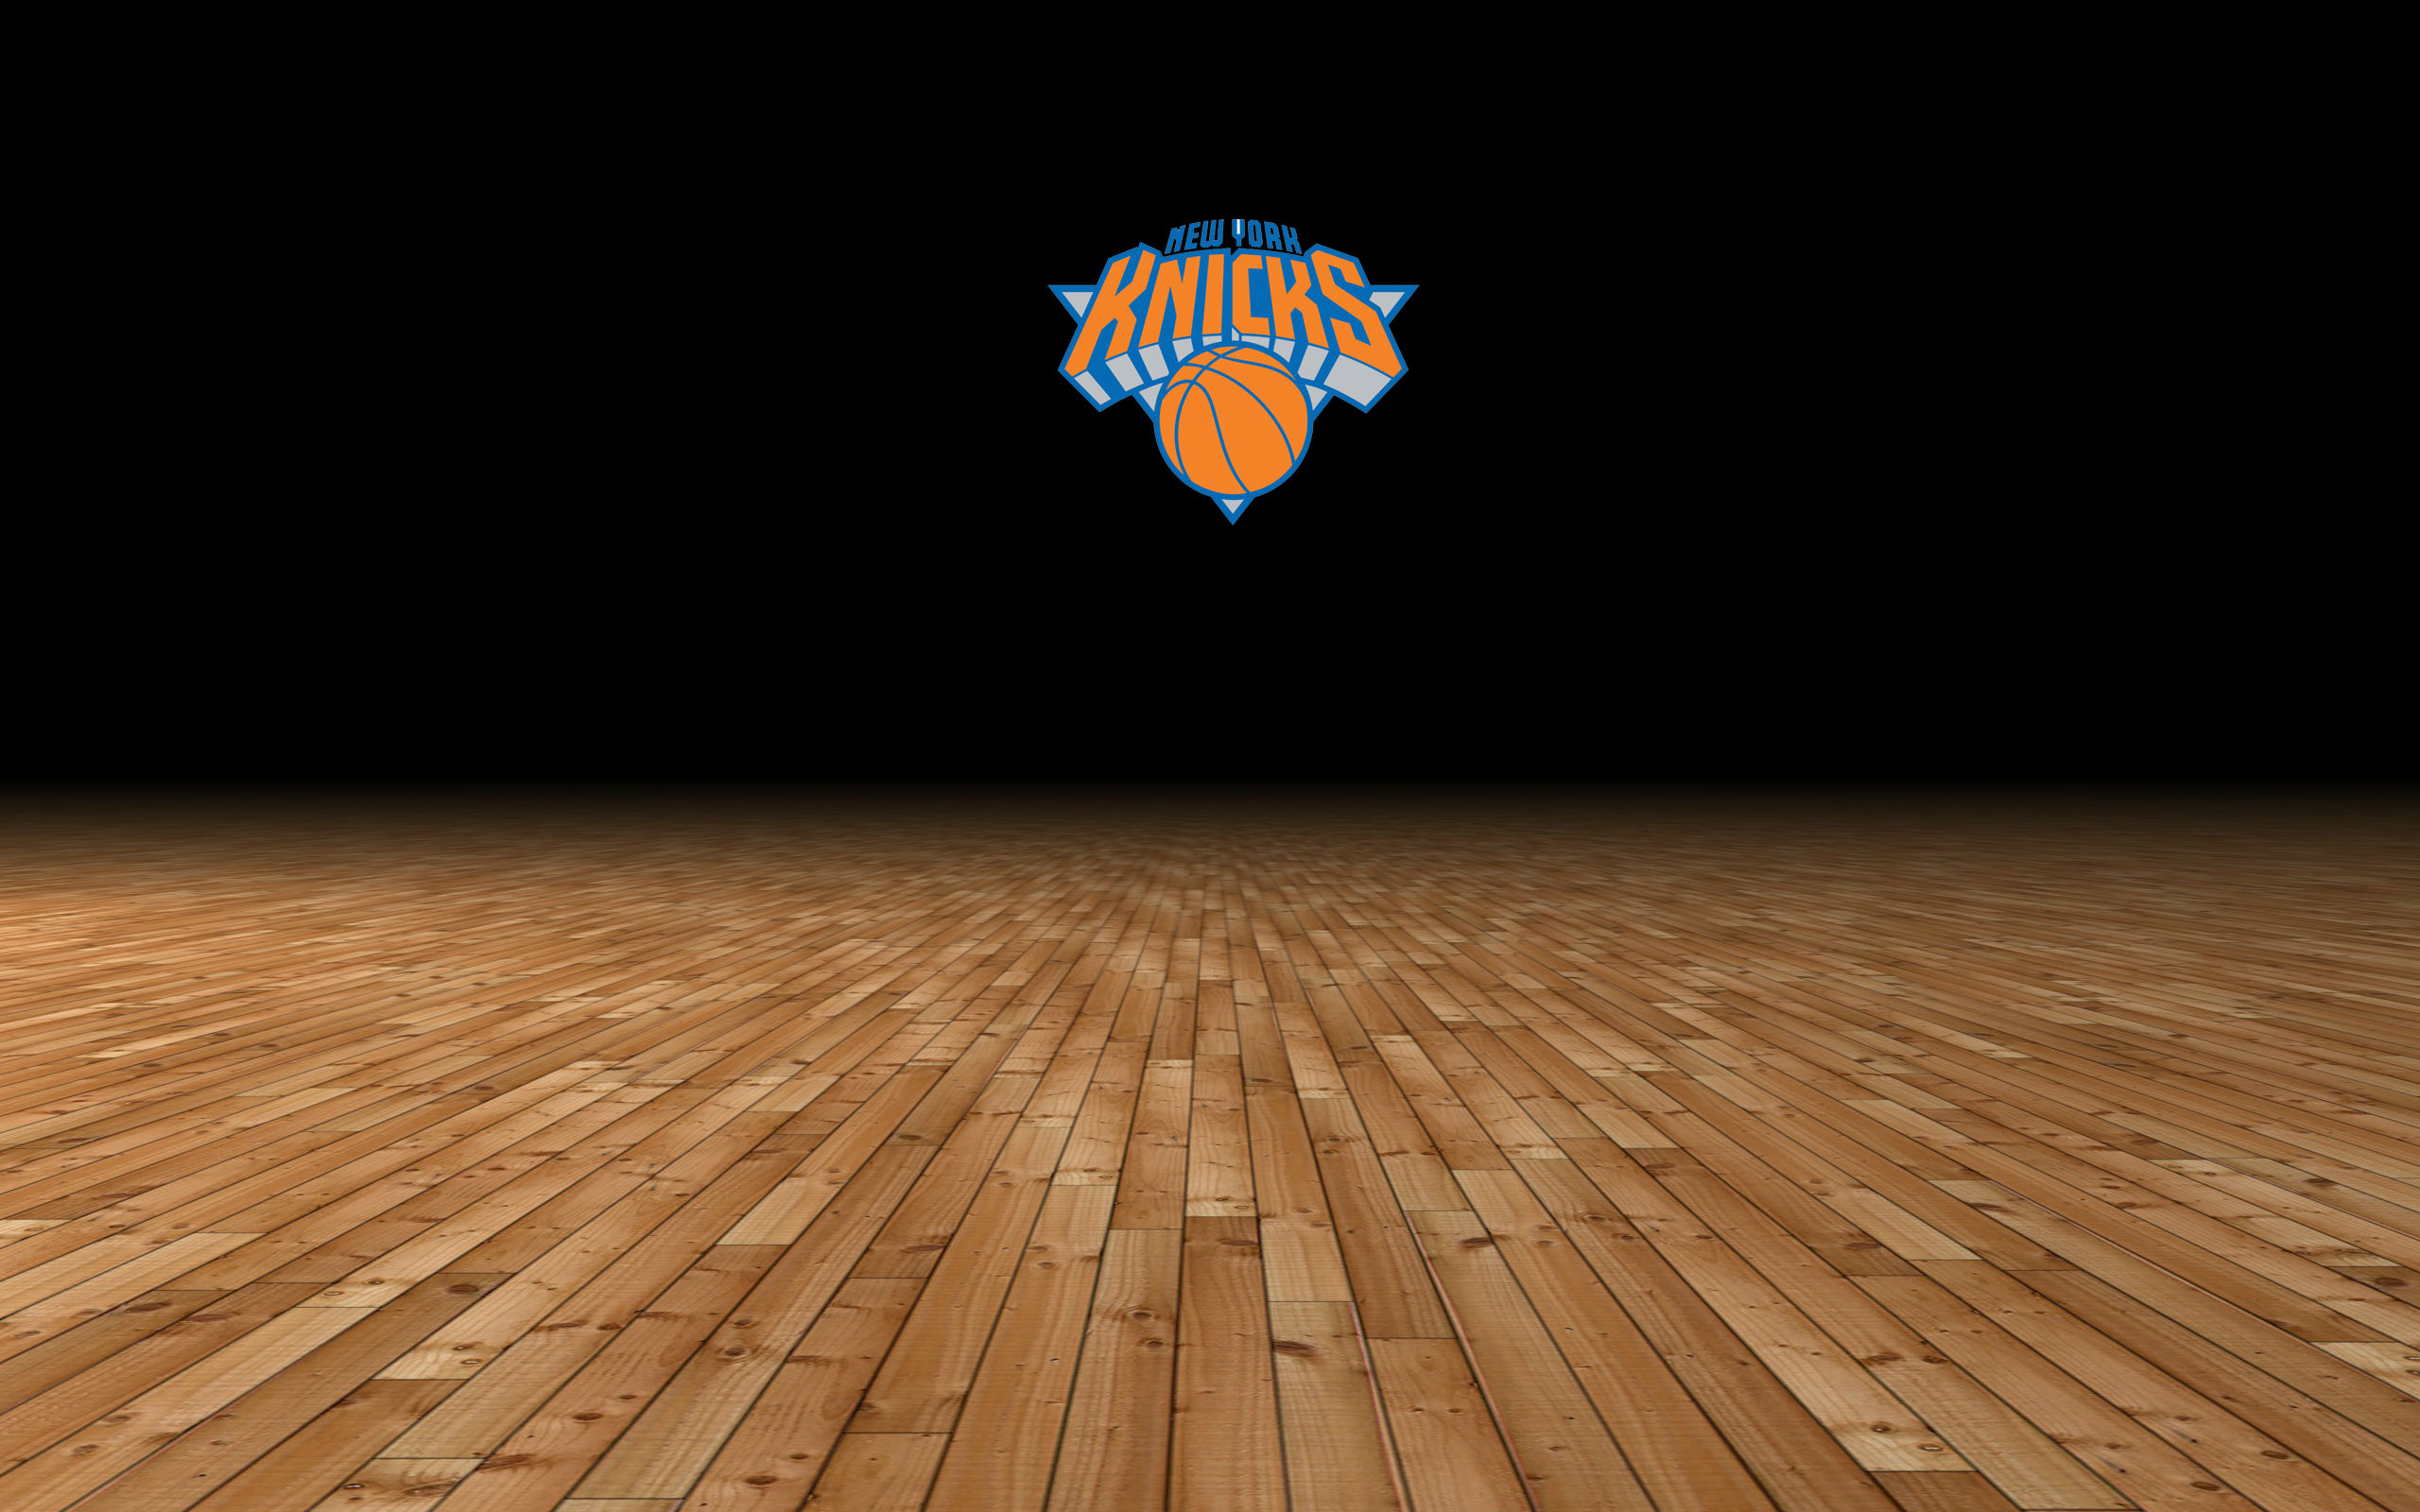 New York Knicks Wallpaper 2013 85 images